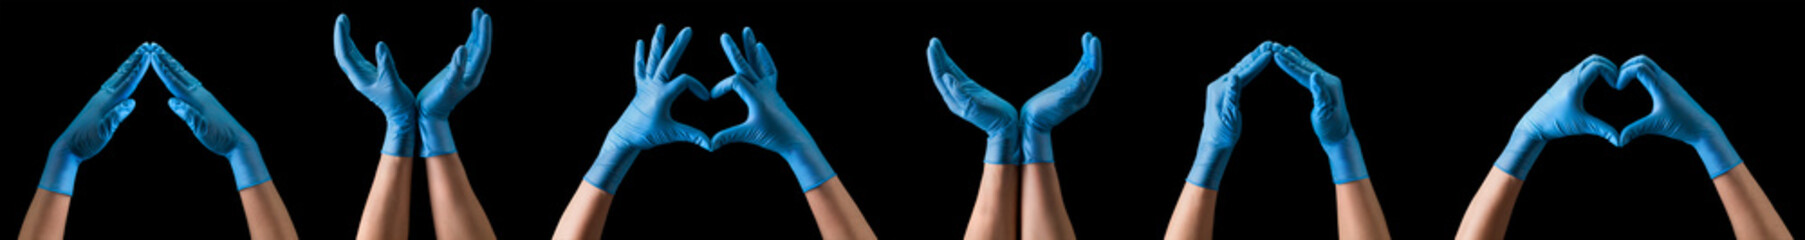 Doctor's hand in sterile medical gloves showing gesture or something on black